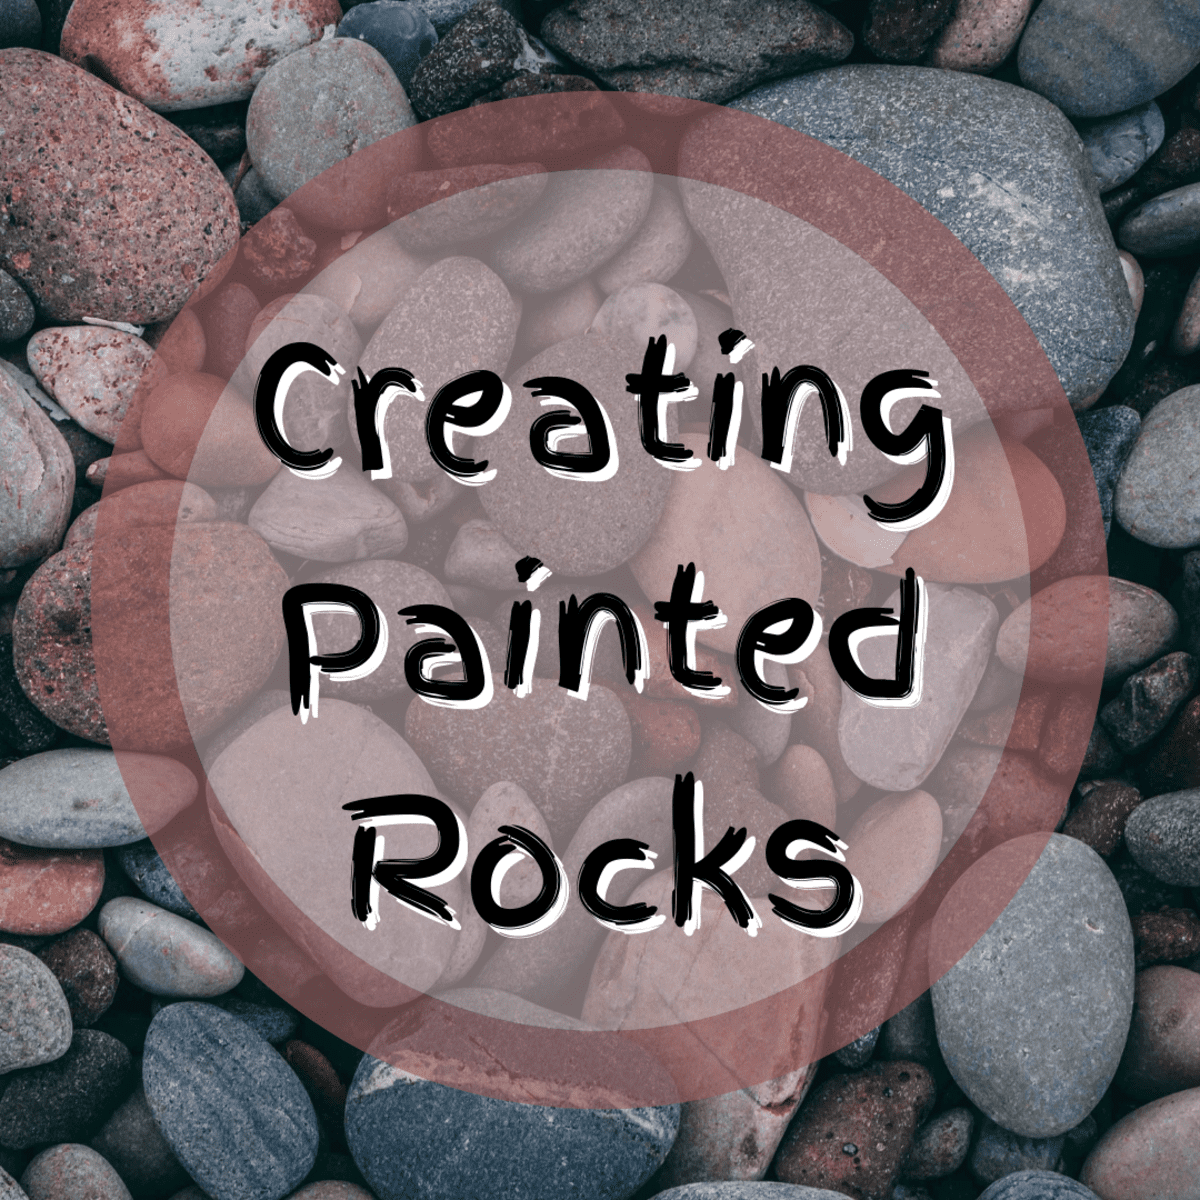 How to Paint Rocks - FeltMagnet